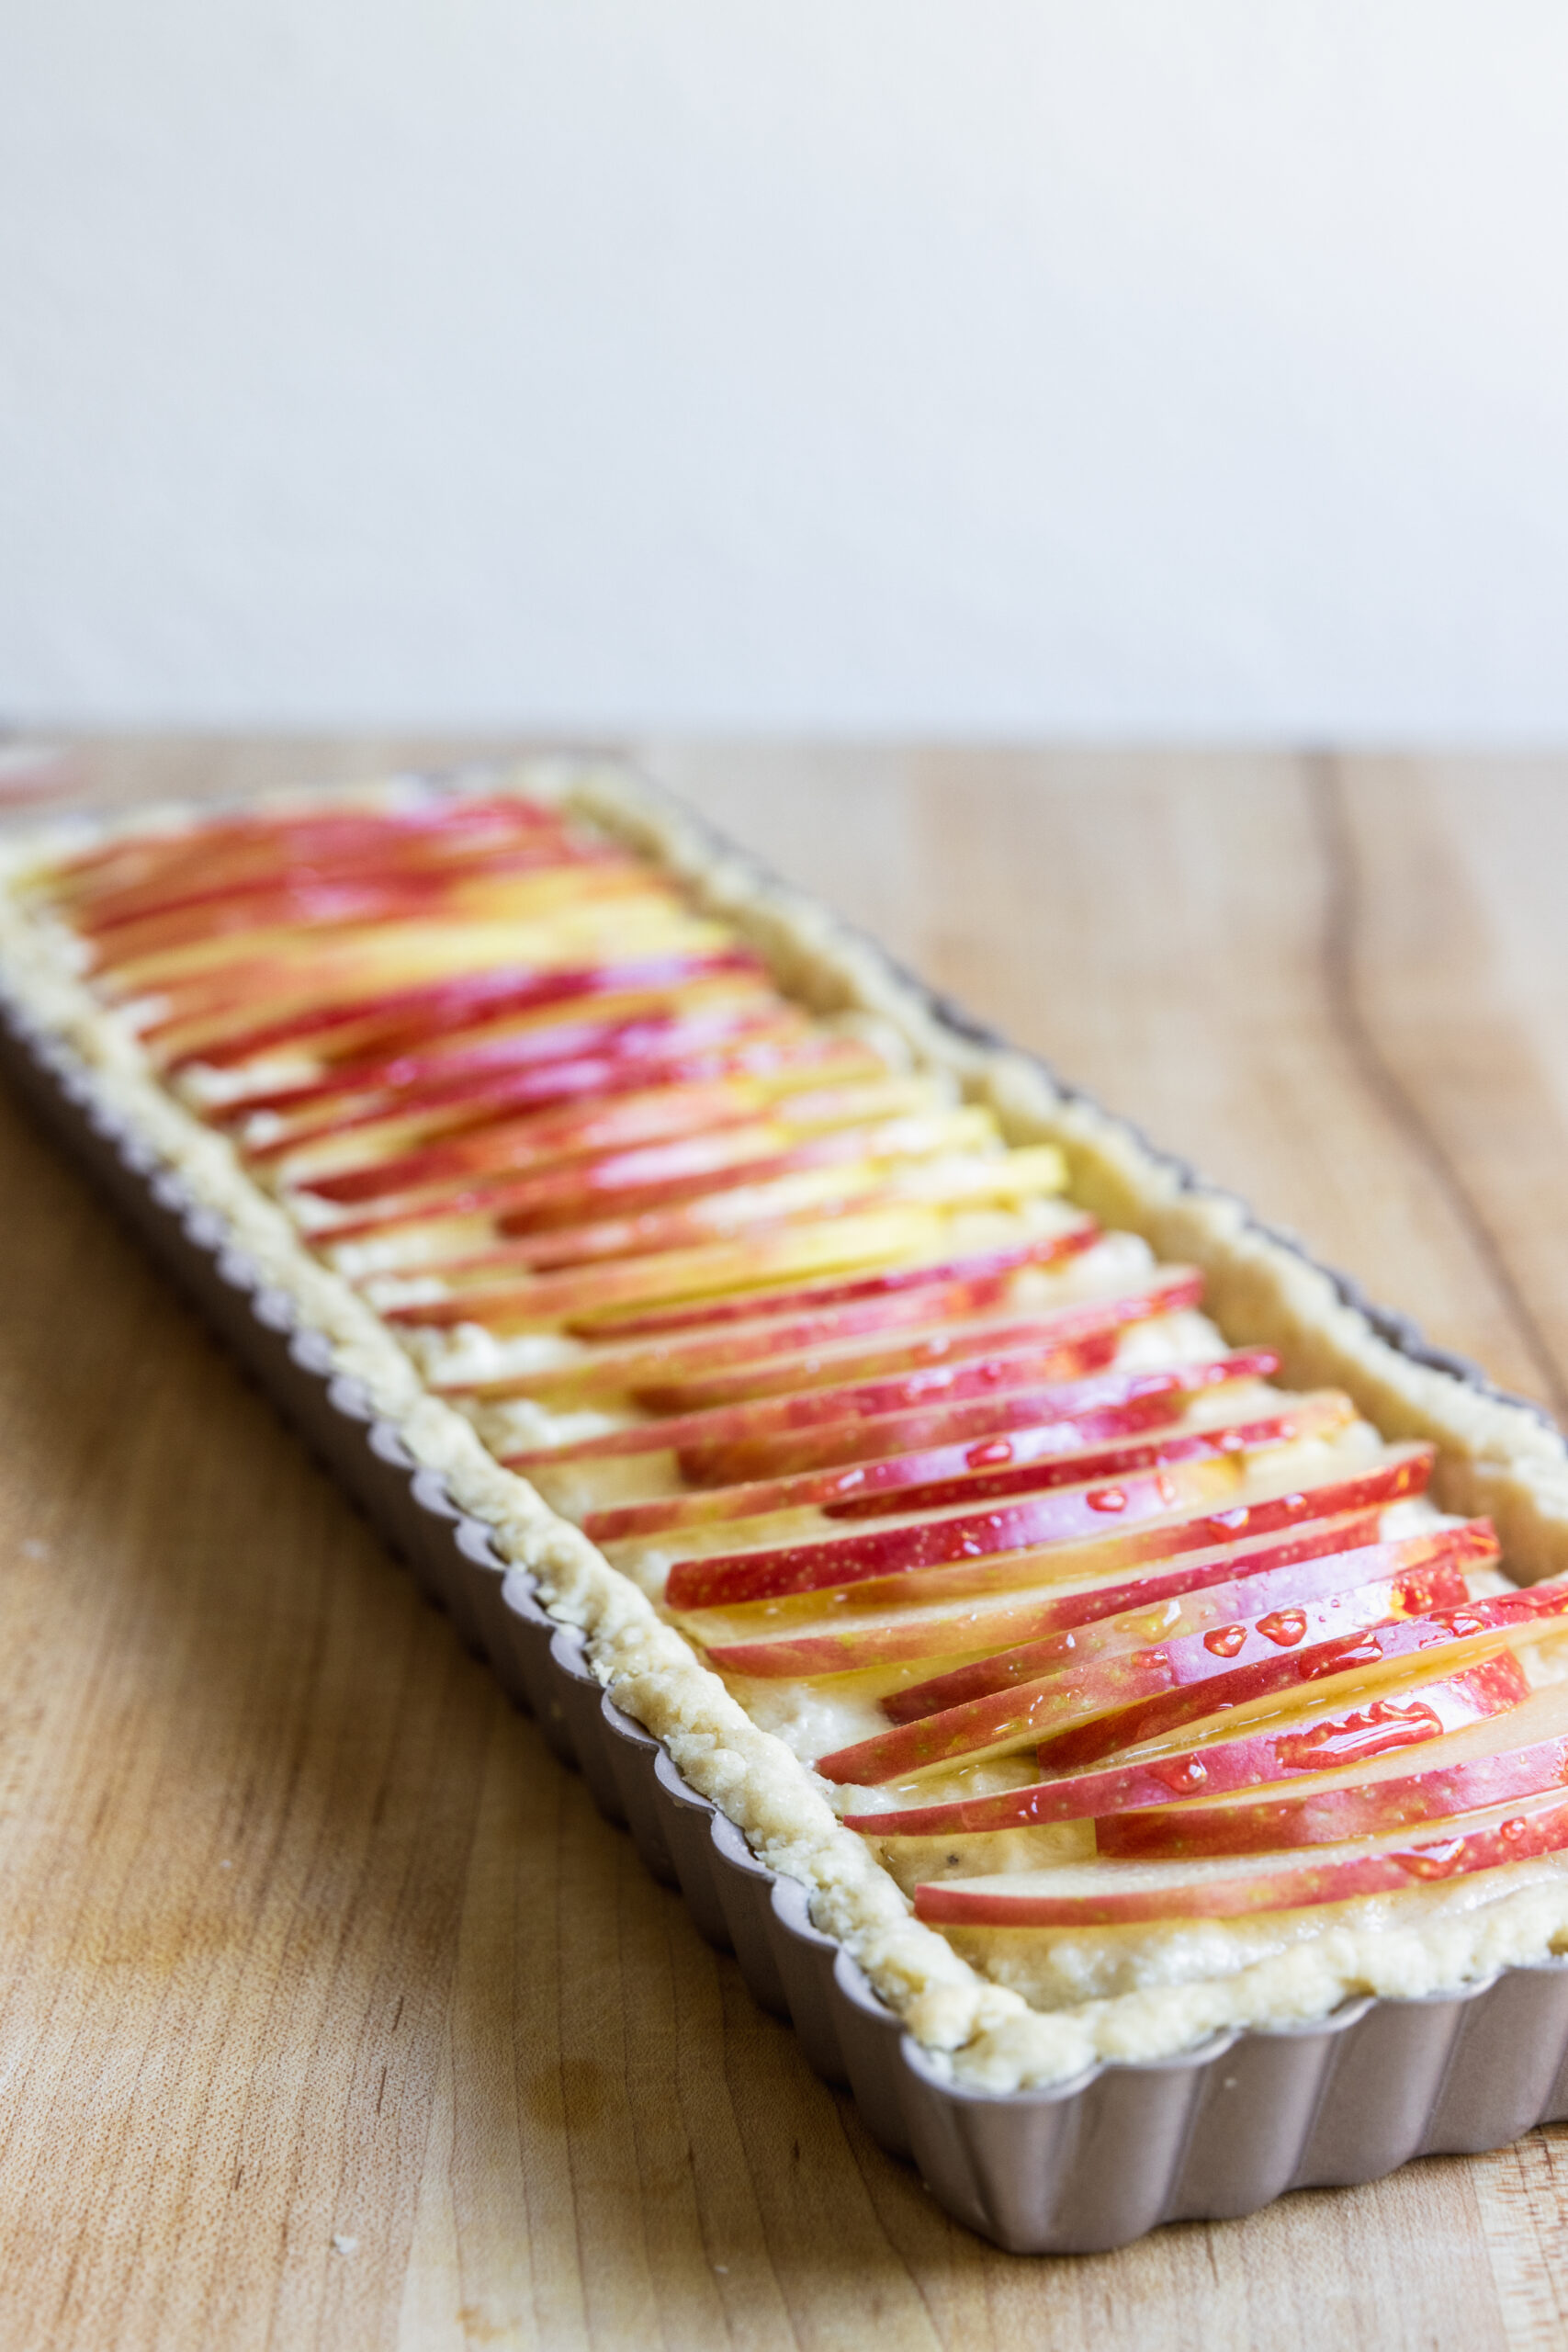 Apple Tart ready to be baked